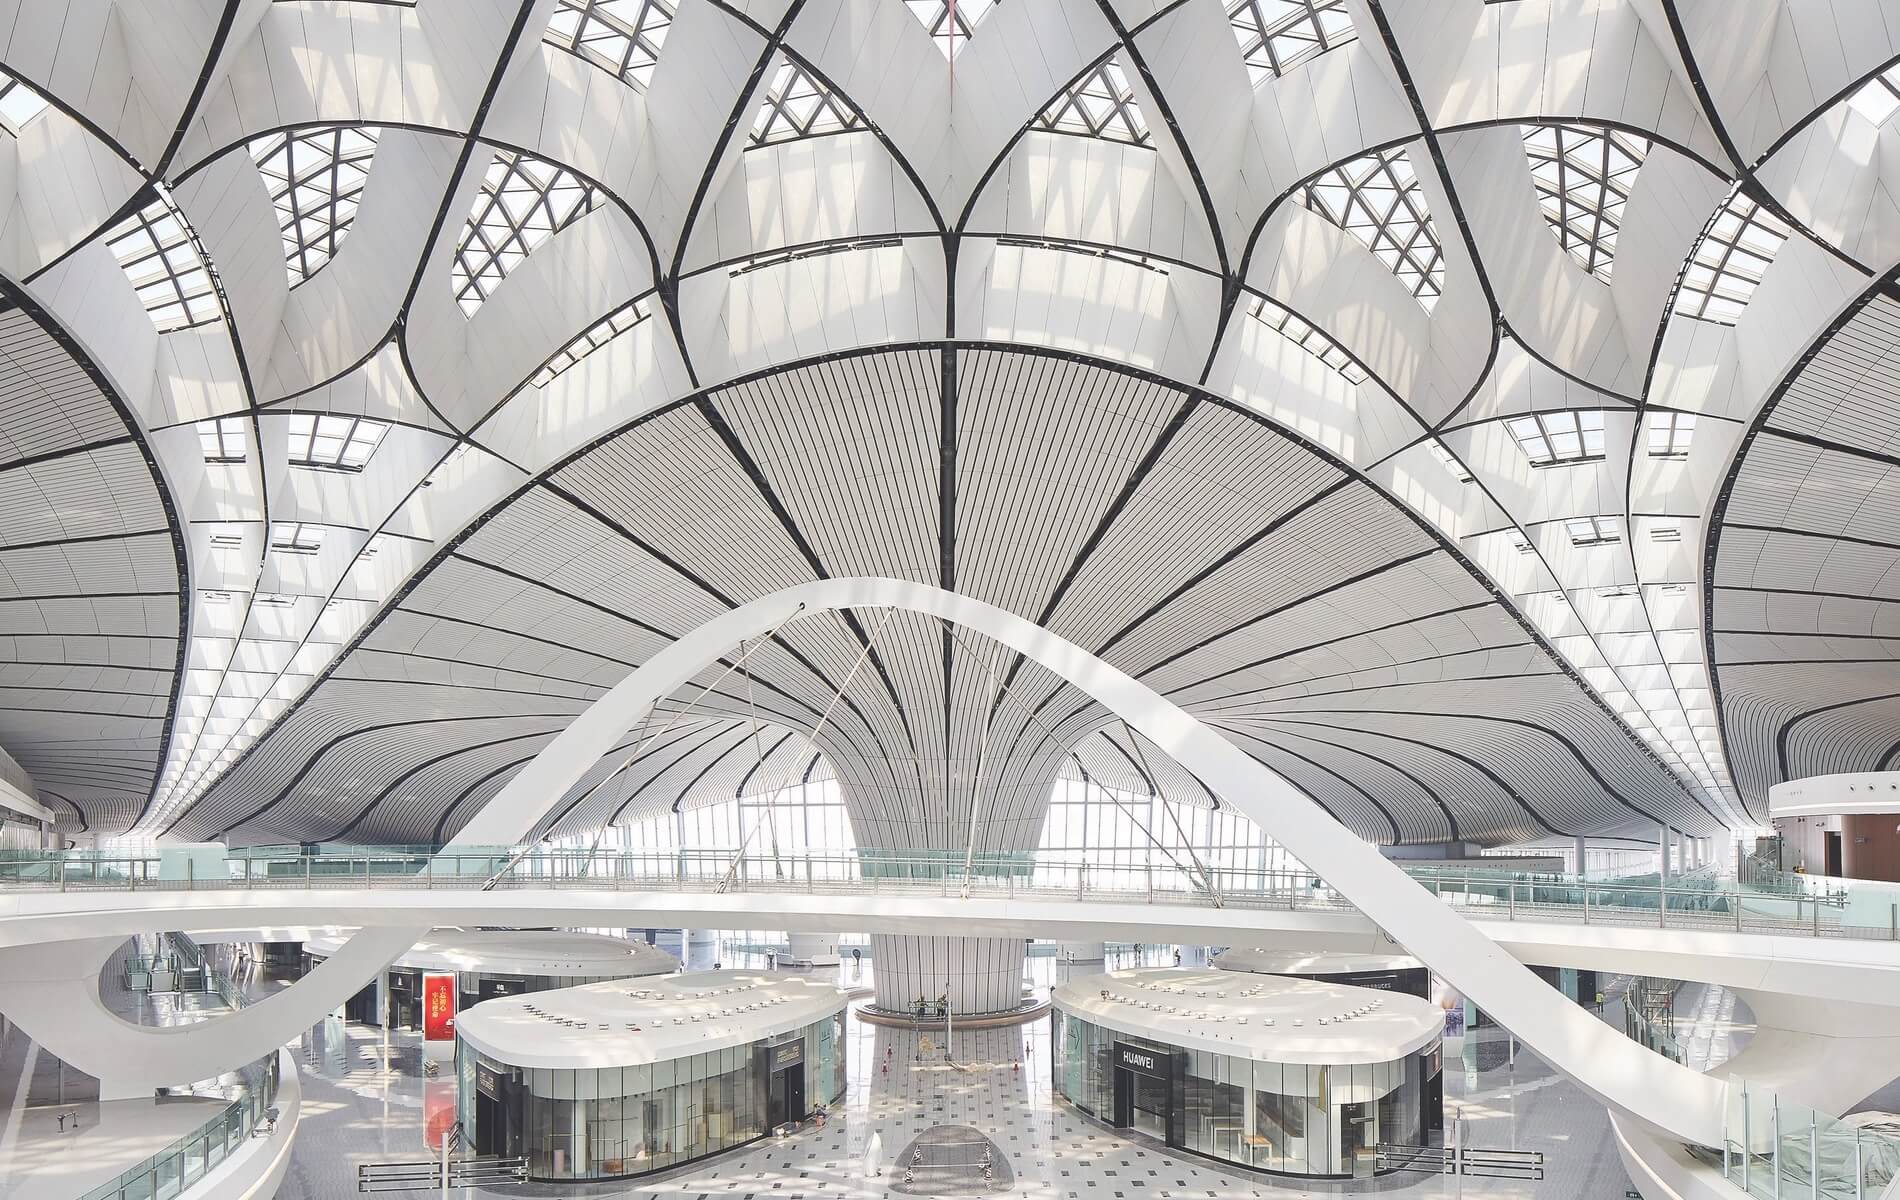 Beijing Daxing International Airport, Zaha Hadid